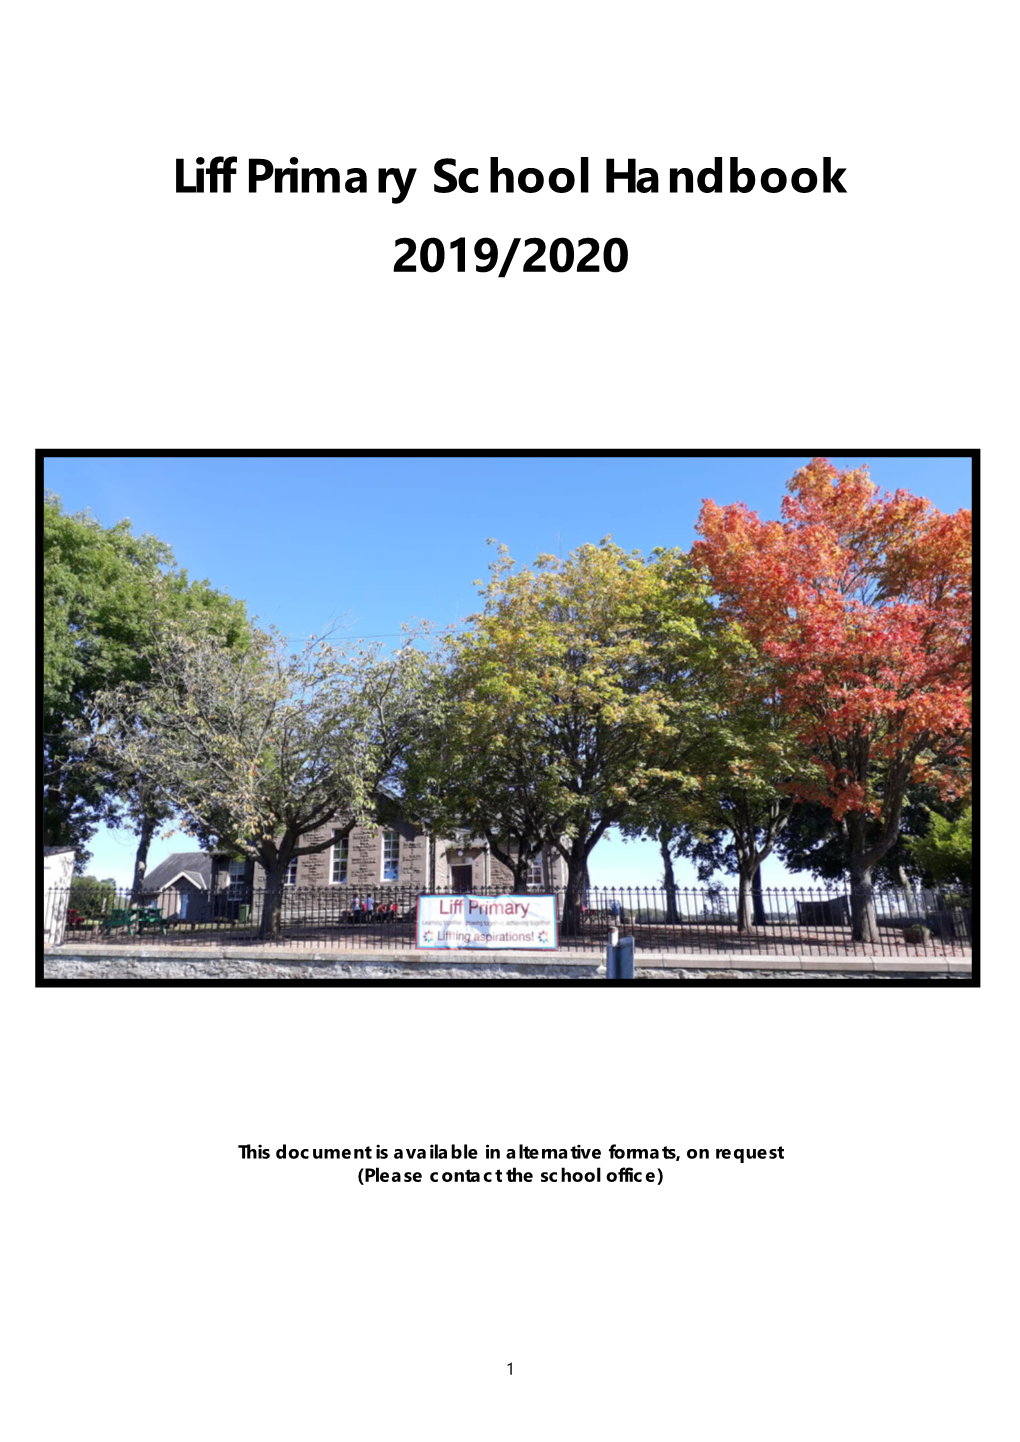 Liff Primary School Handbook 2019/2020